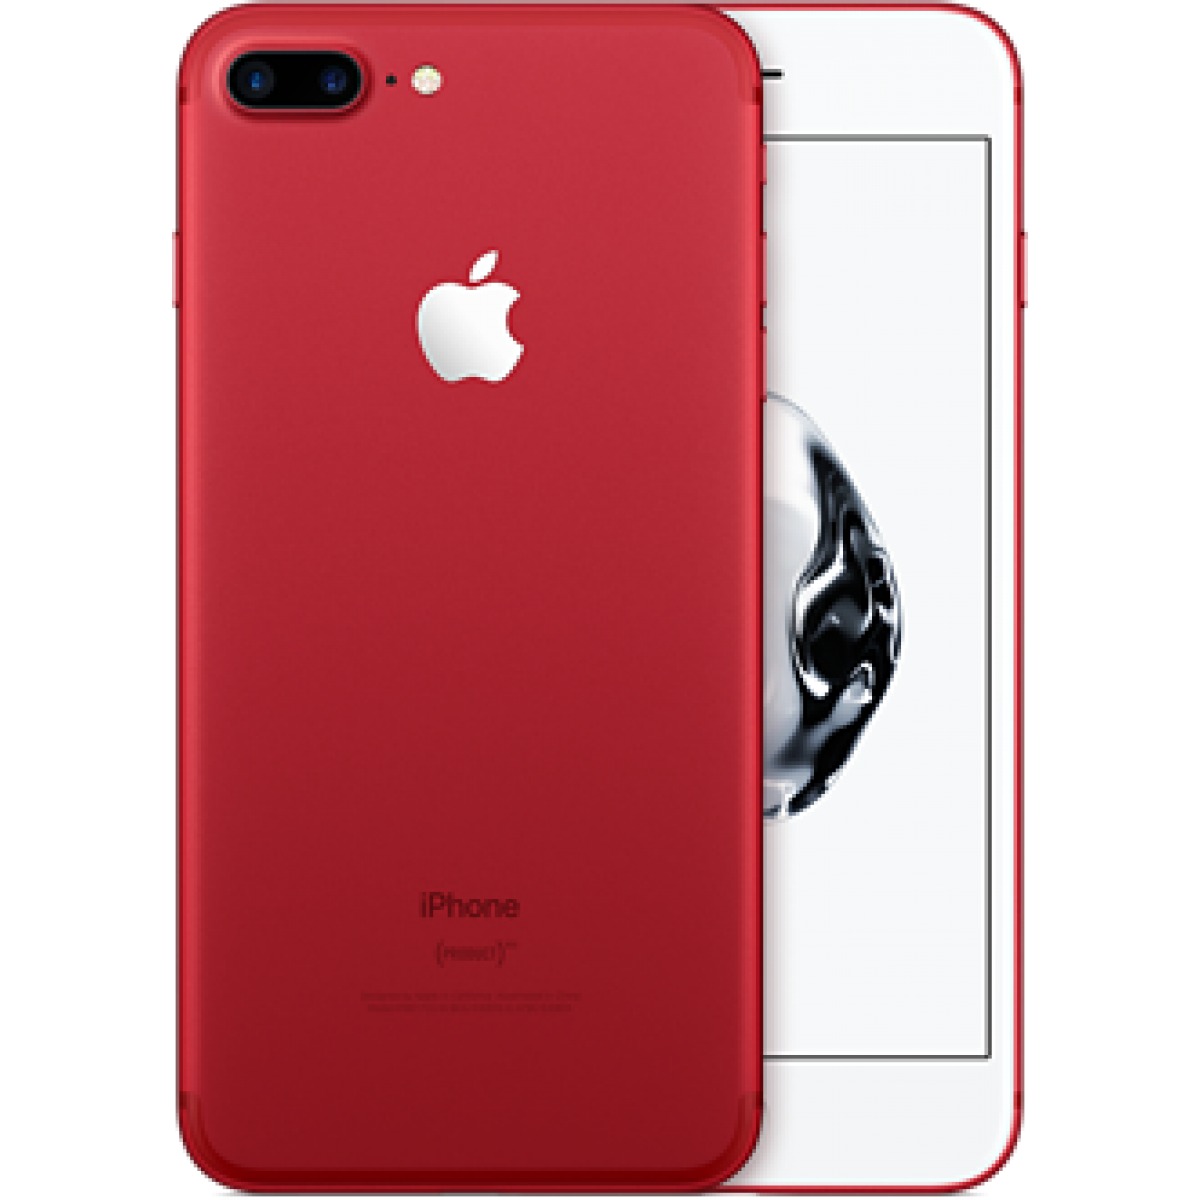 Apple Iphone 7 Plus 128gb Product Red, Rojo, Sellado, Libre! - $ 20,999